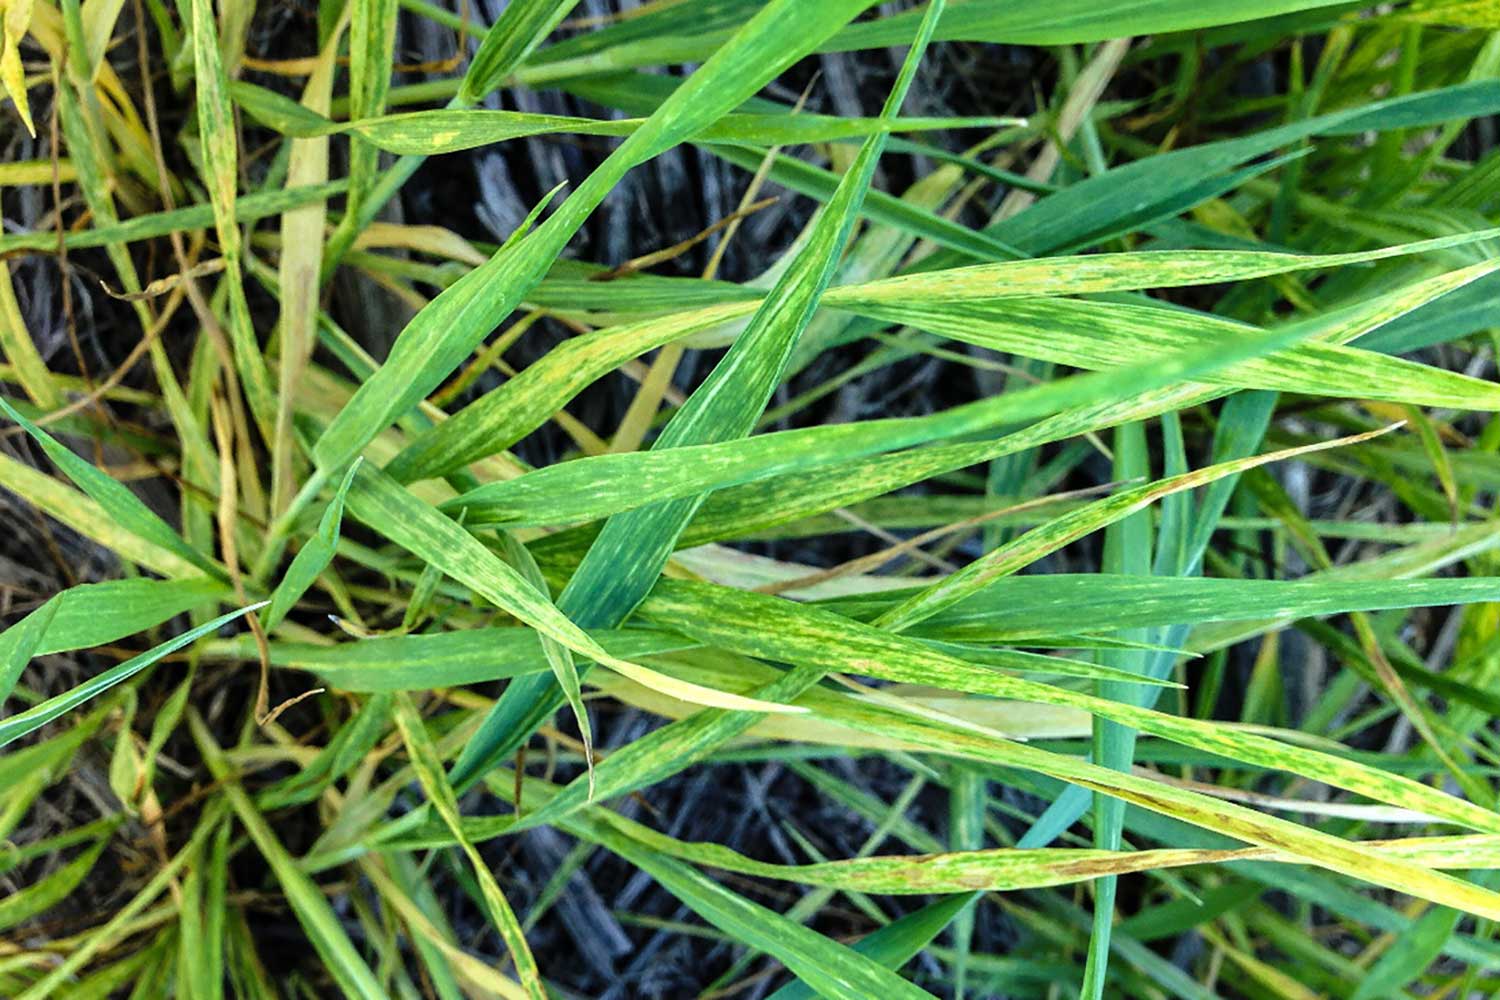 A few wheat plants showing heavy yellowing mosaic symptoms due to Wheat streak mosaic virus.